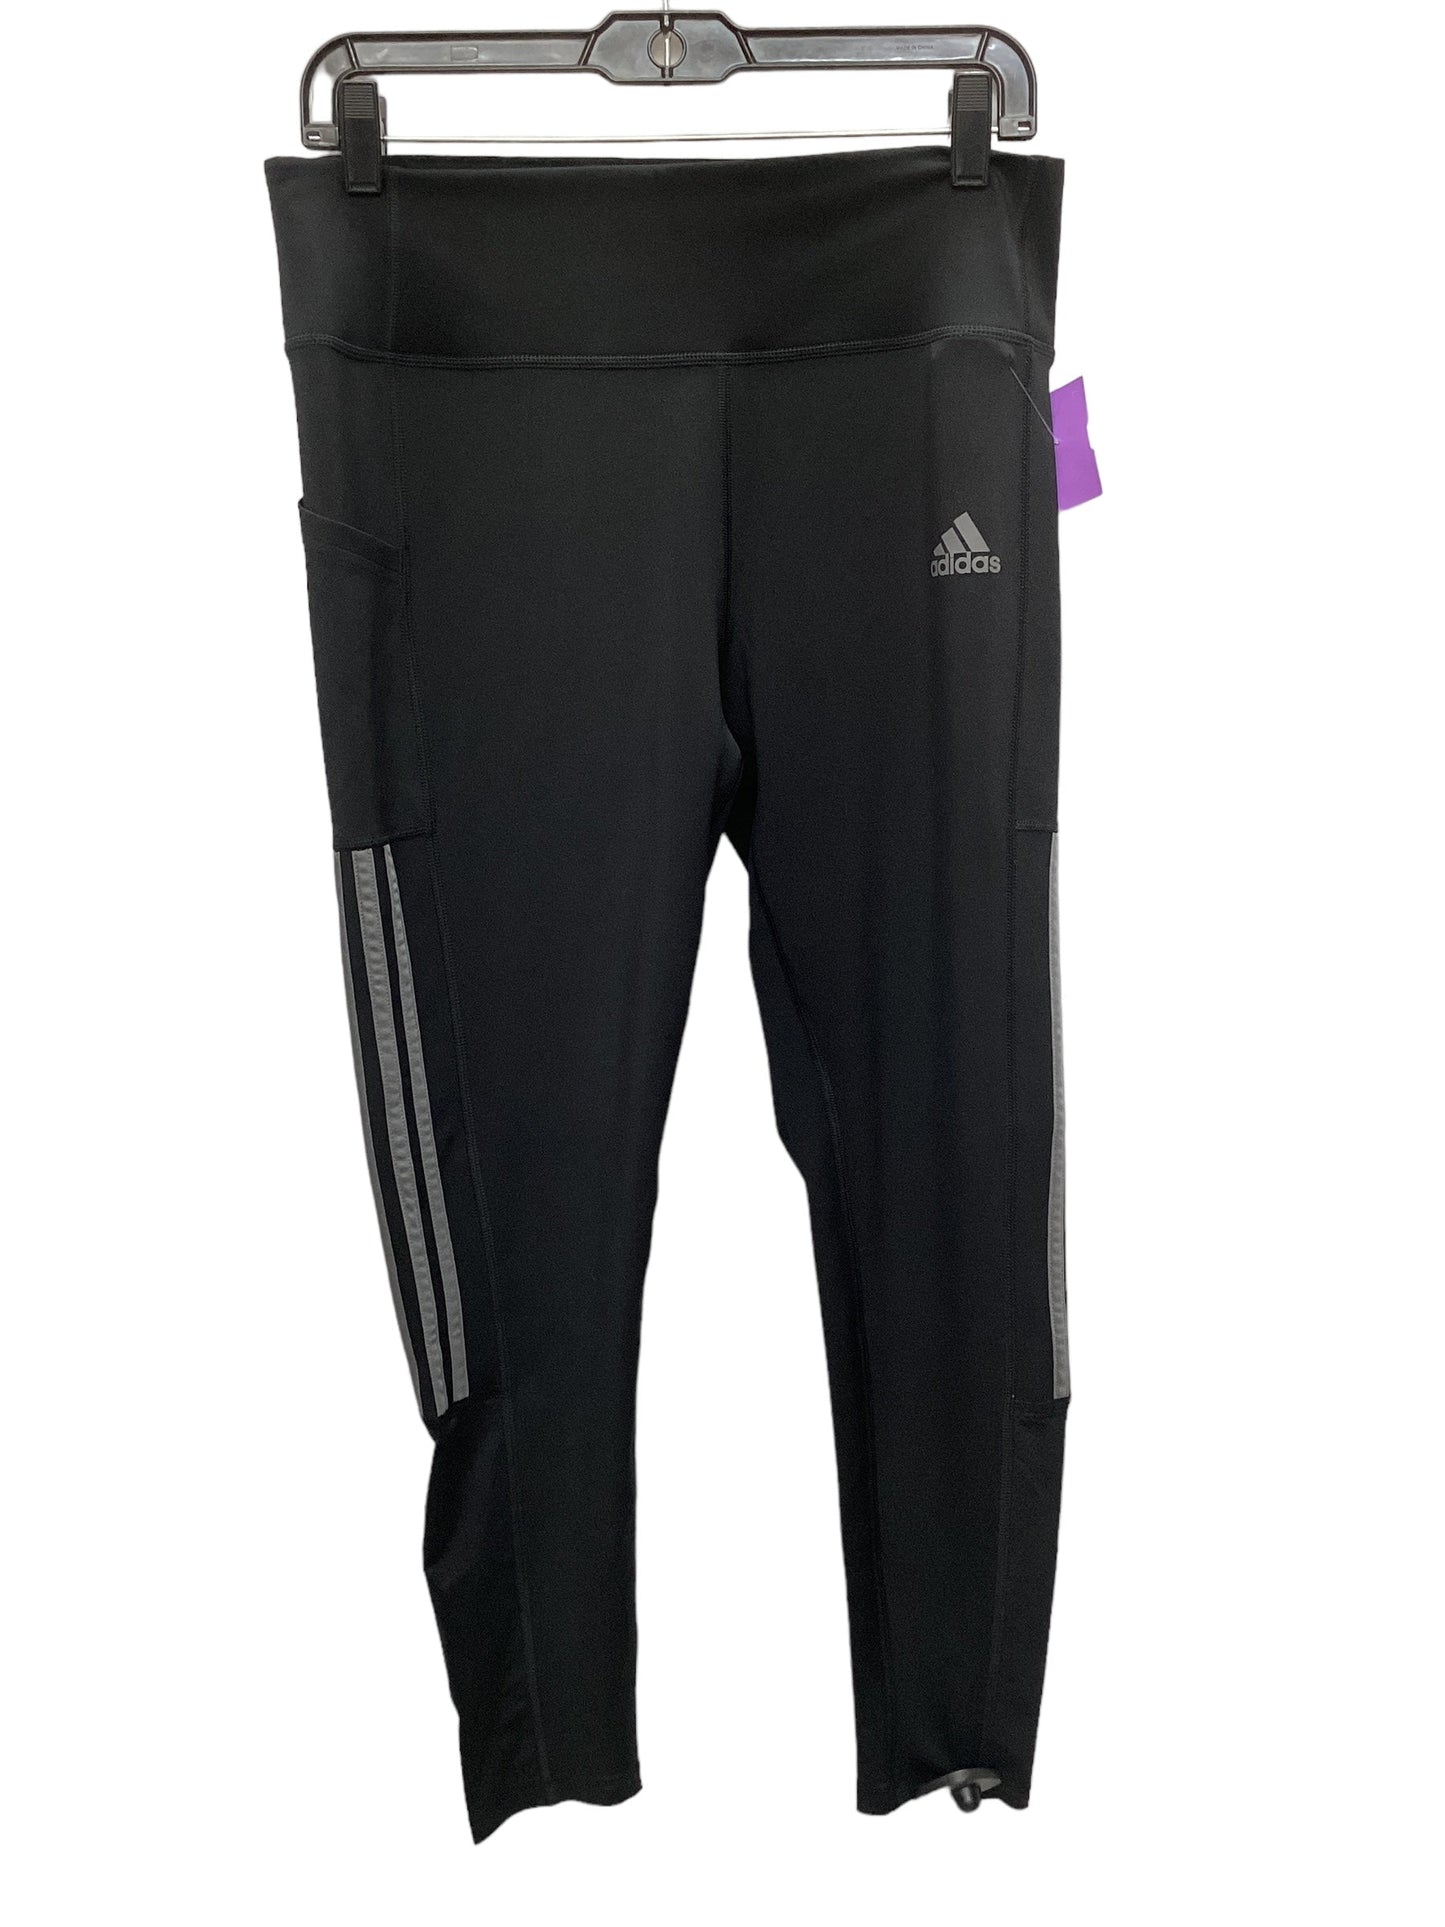 Black Athletic Leggings Adidas, Size L